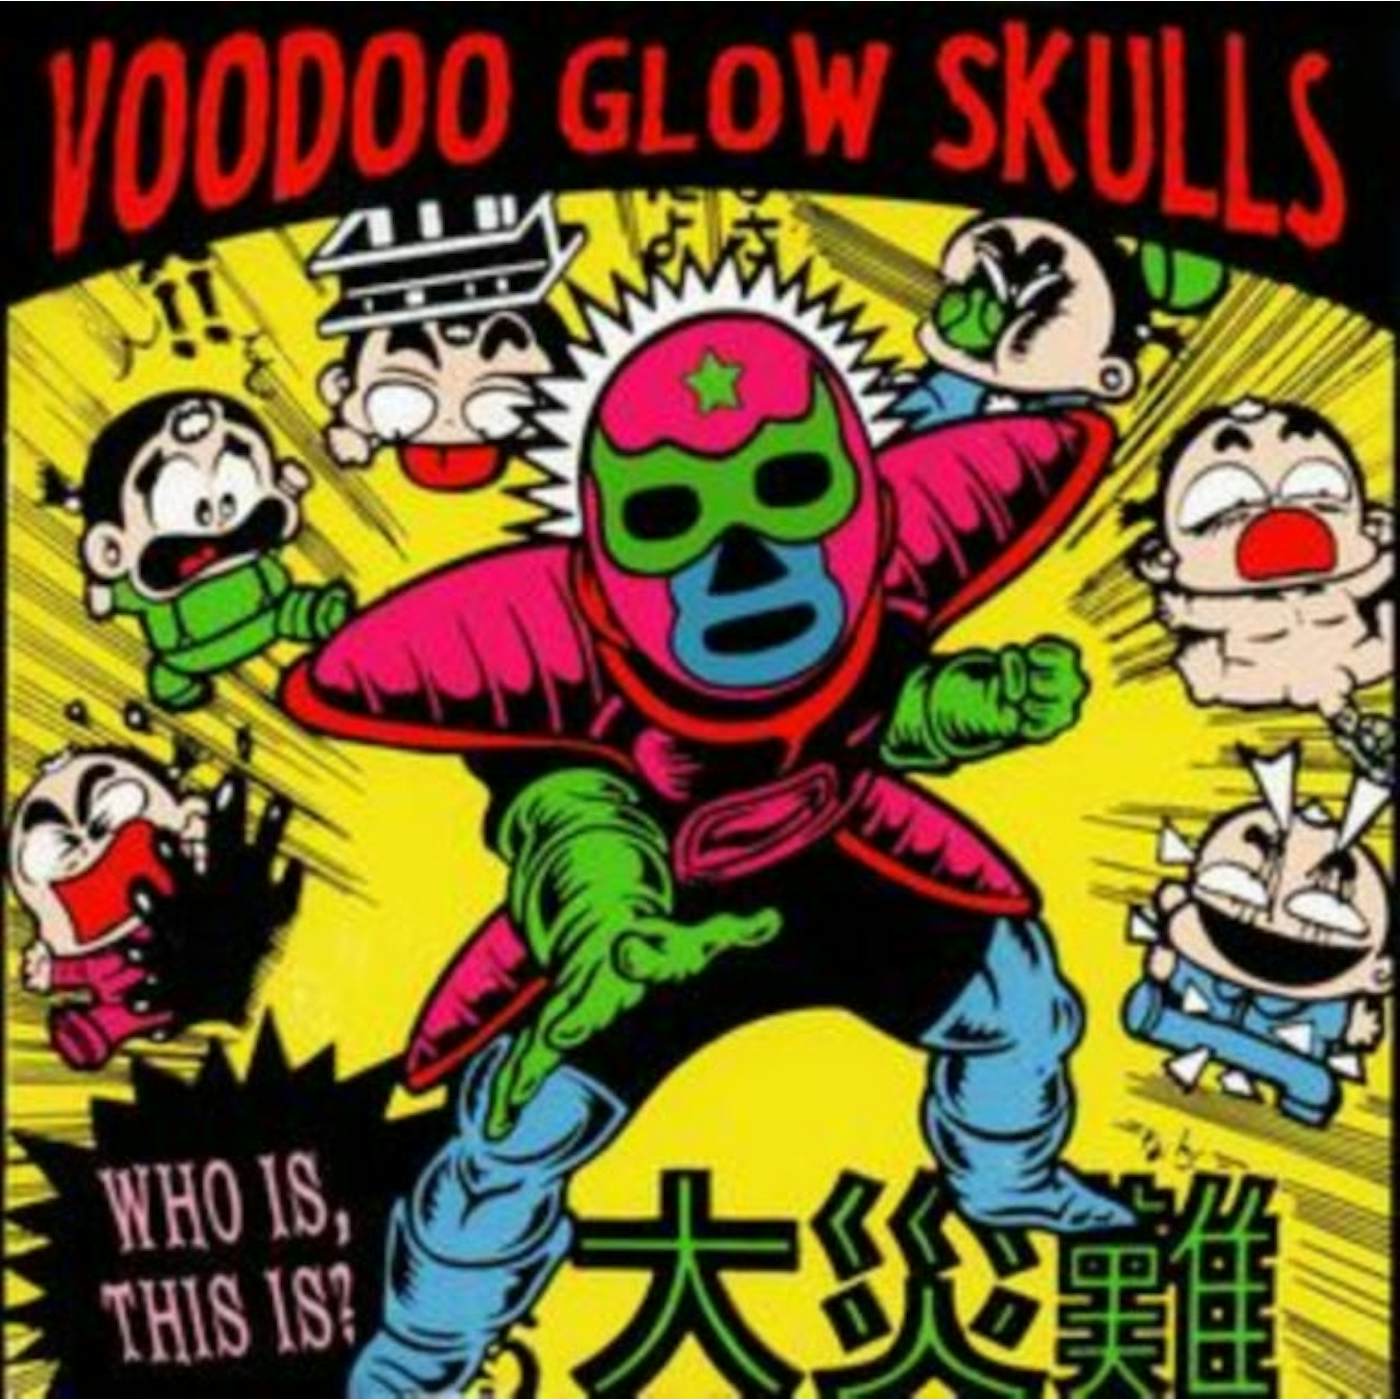 Voodoo Glow Skulls CD - Who Is, This Is?